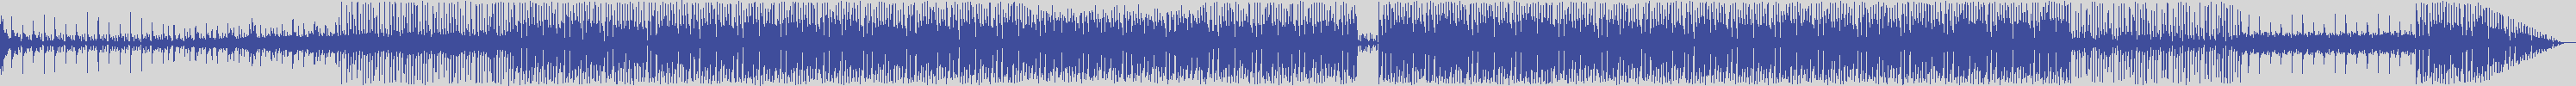 noclouds_chillout [NOC009] Florida - Discopolix [Original Mix] audio wave form